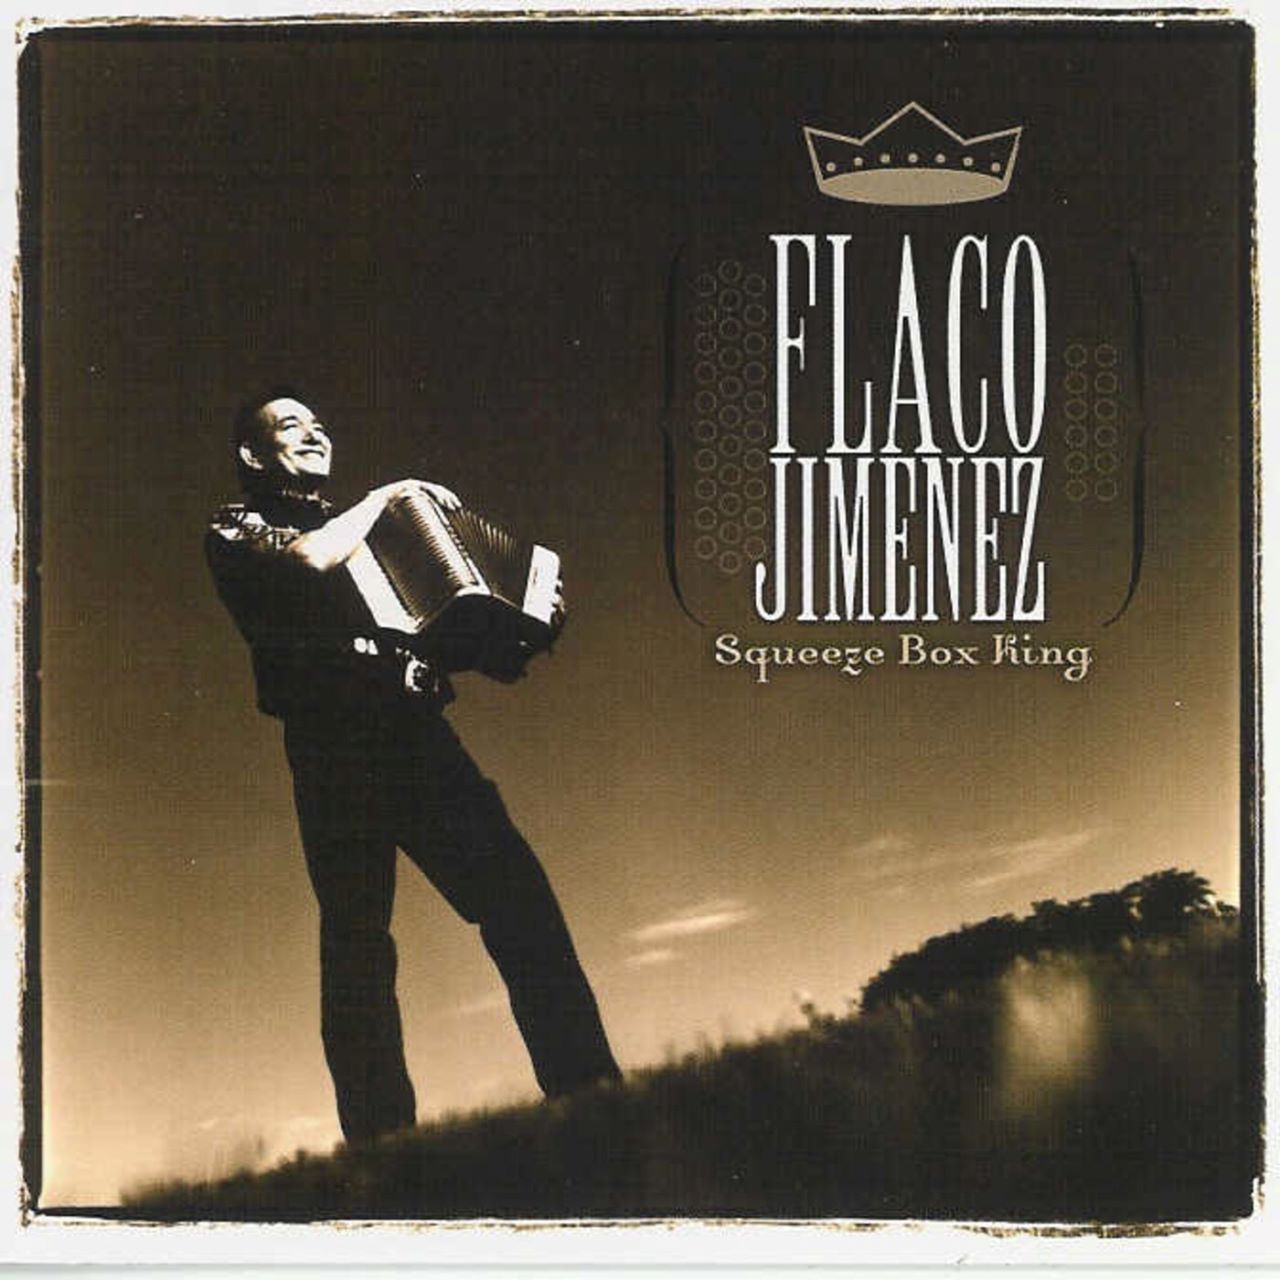 Flaco Jimenez - Squeeze Box King cover album